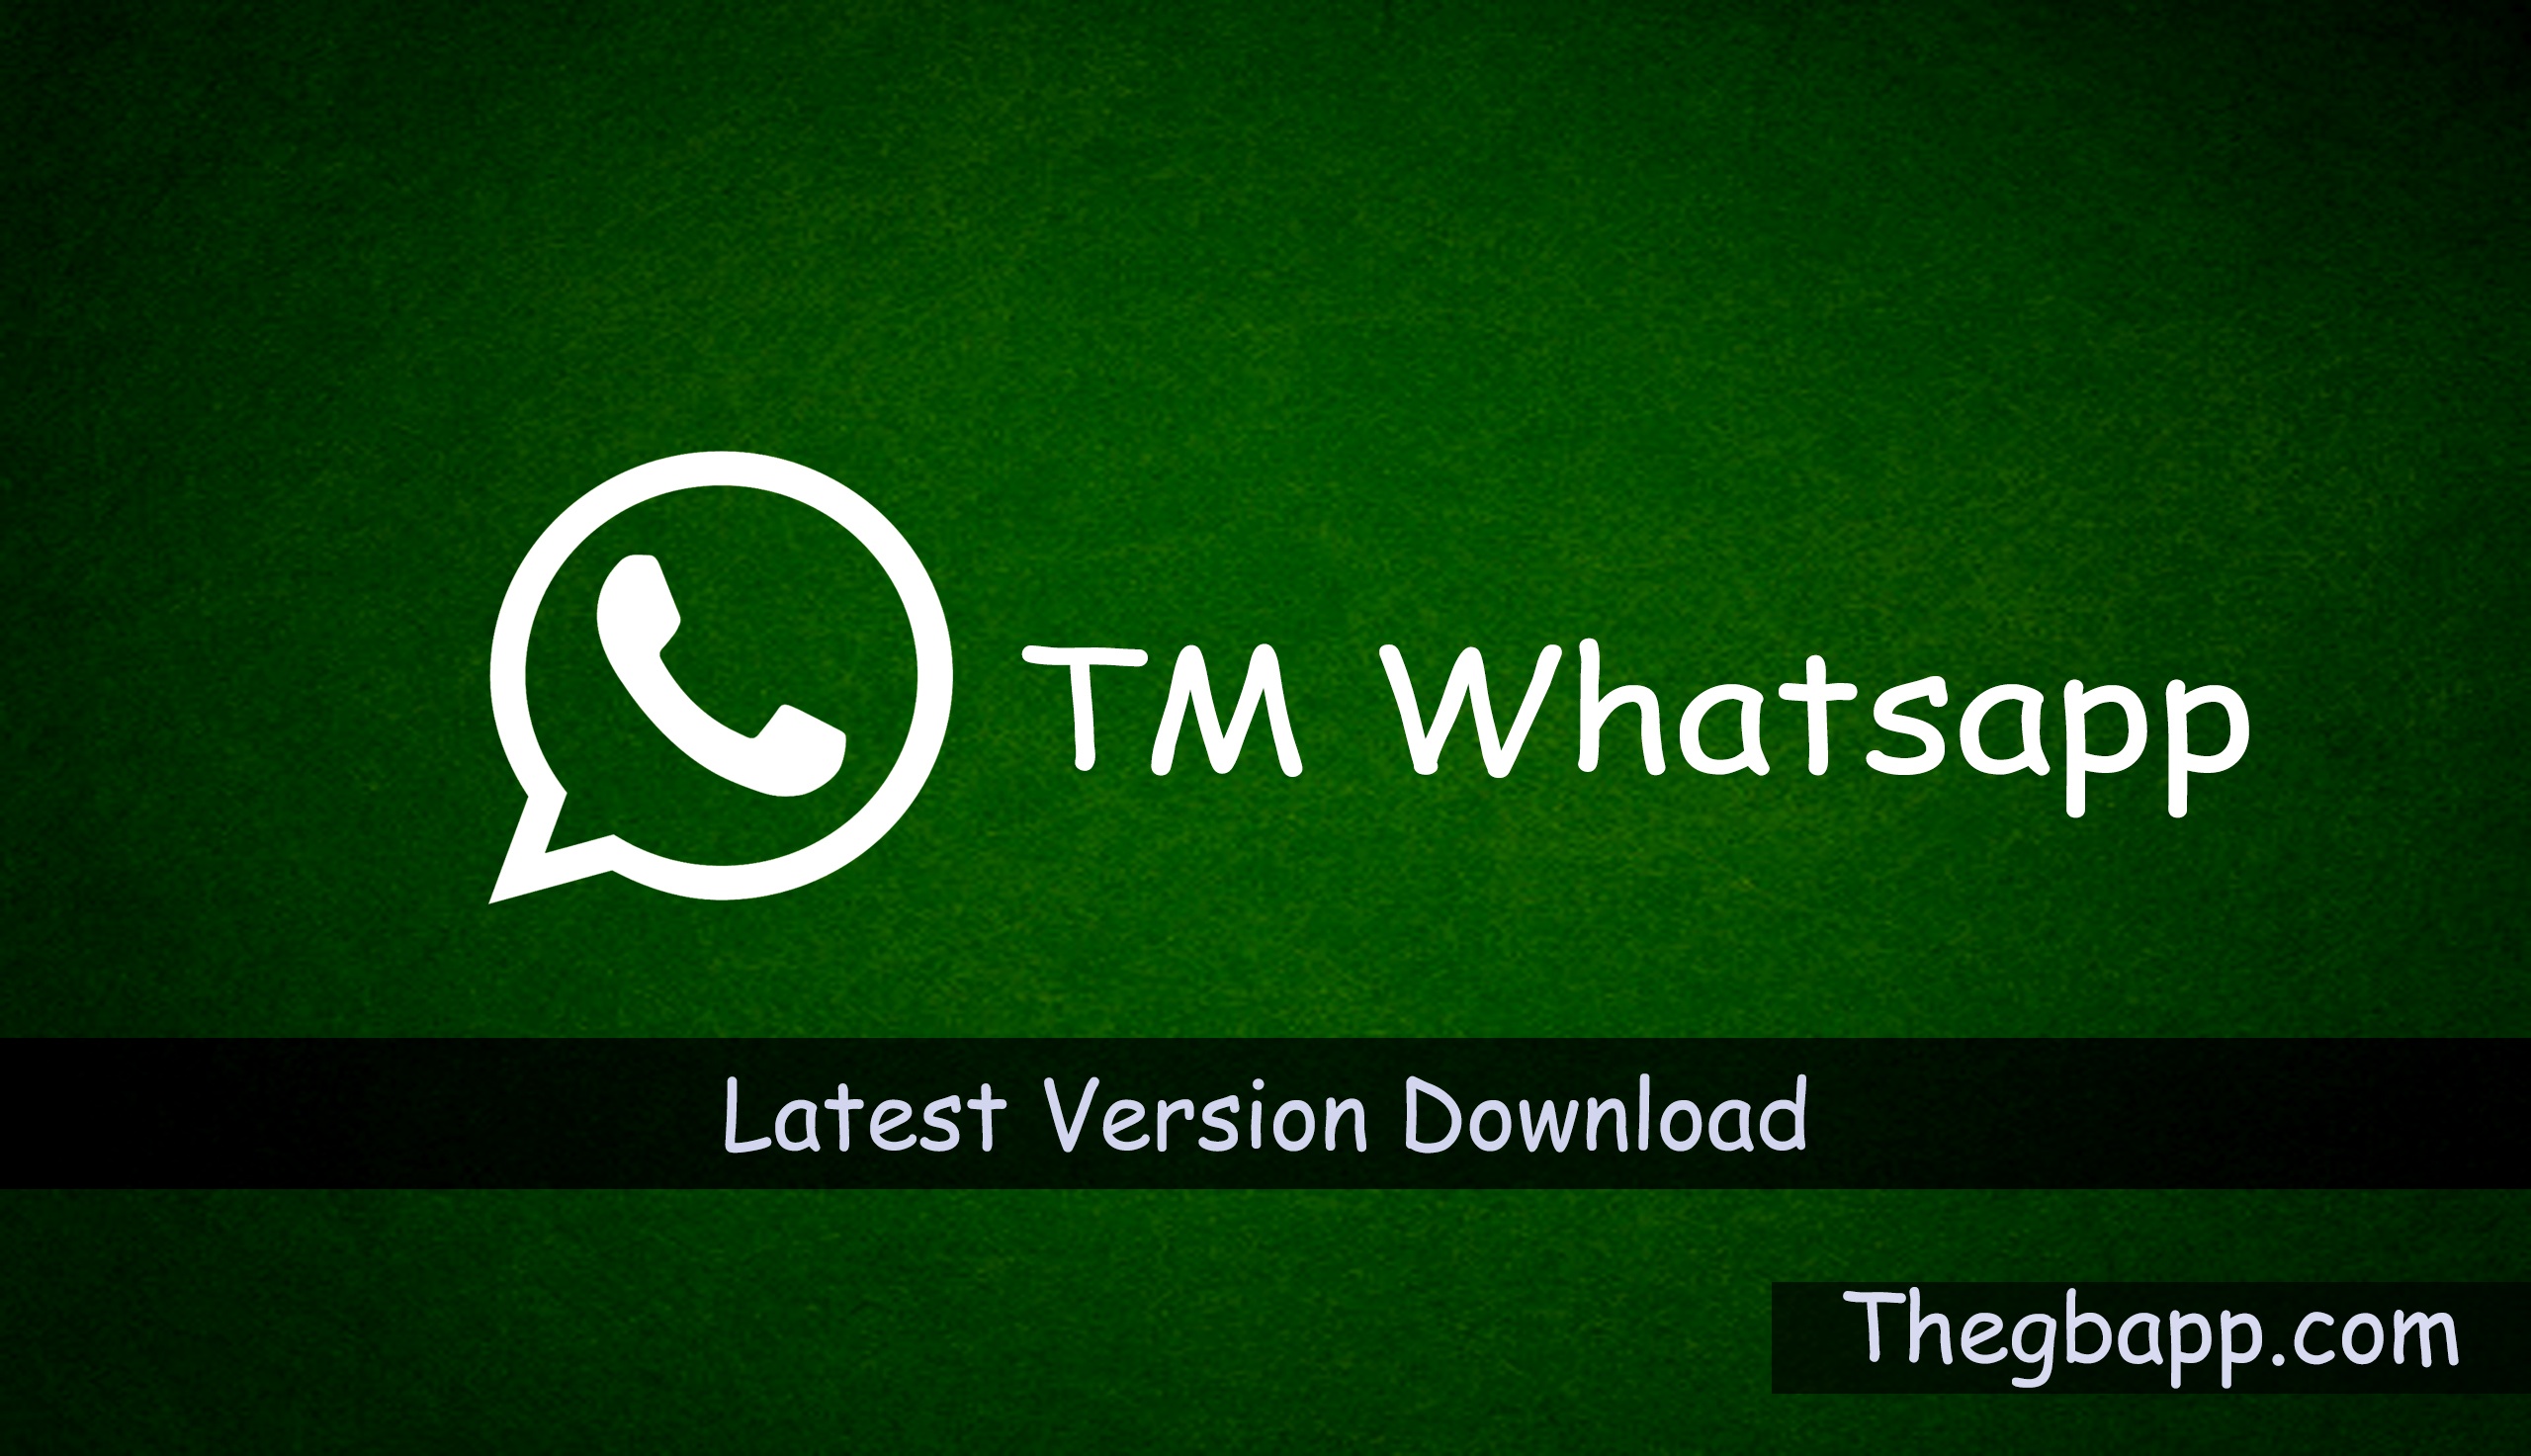 TM Whatsapp